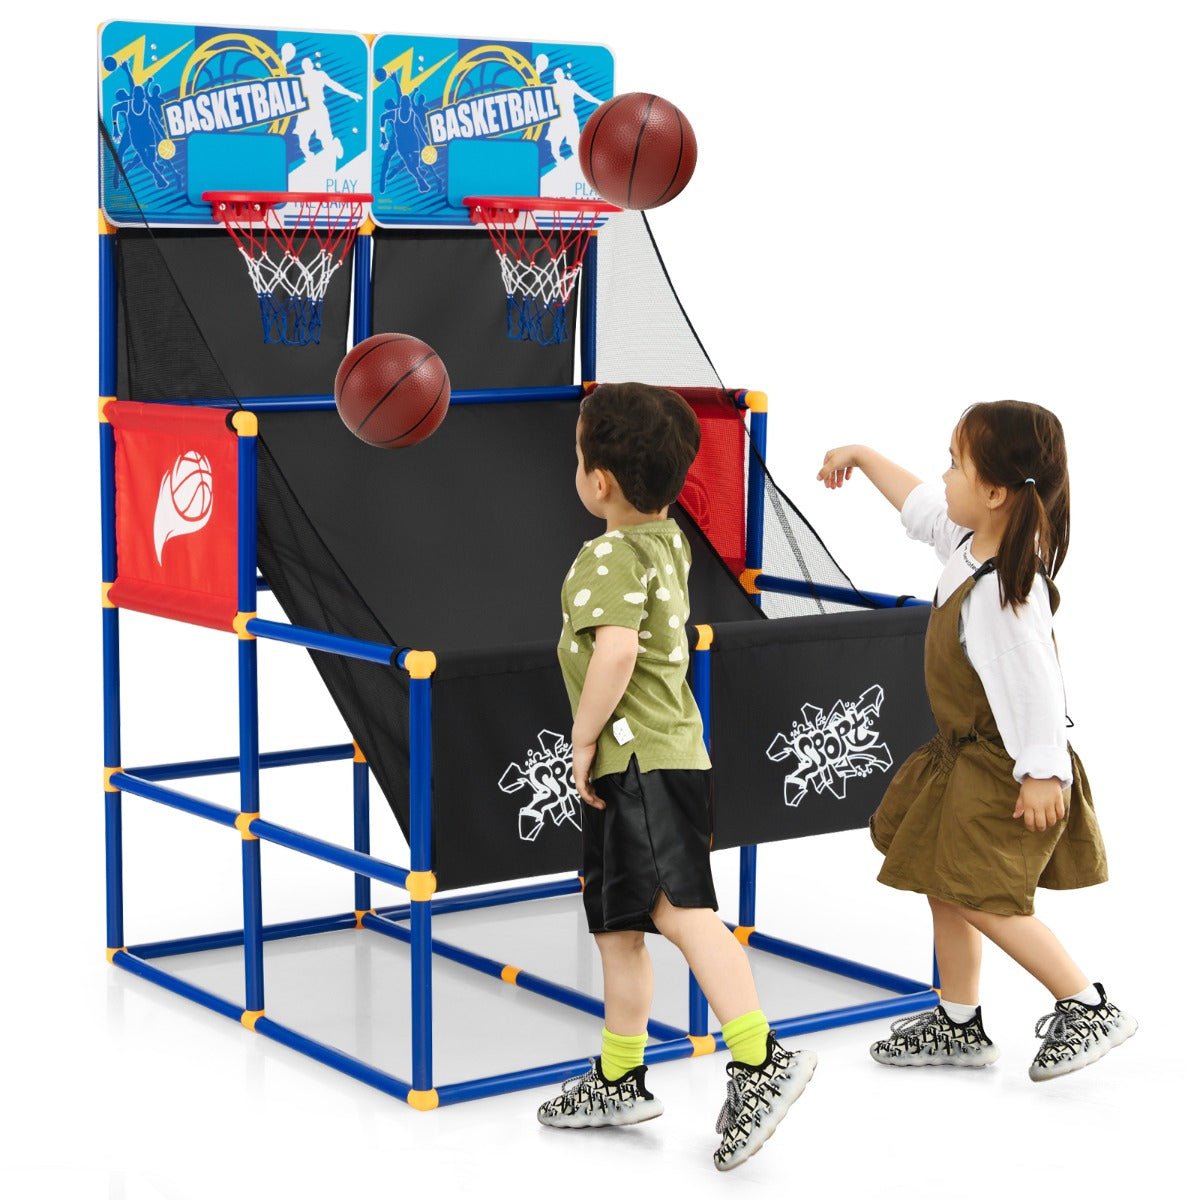 Basketball Fun Galore: Kids Dual Shot Hoop Arcade Game with 2 Hoops